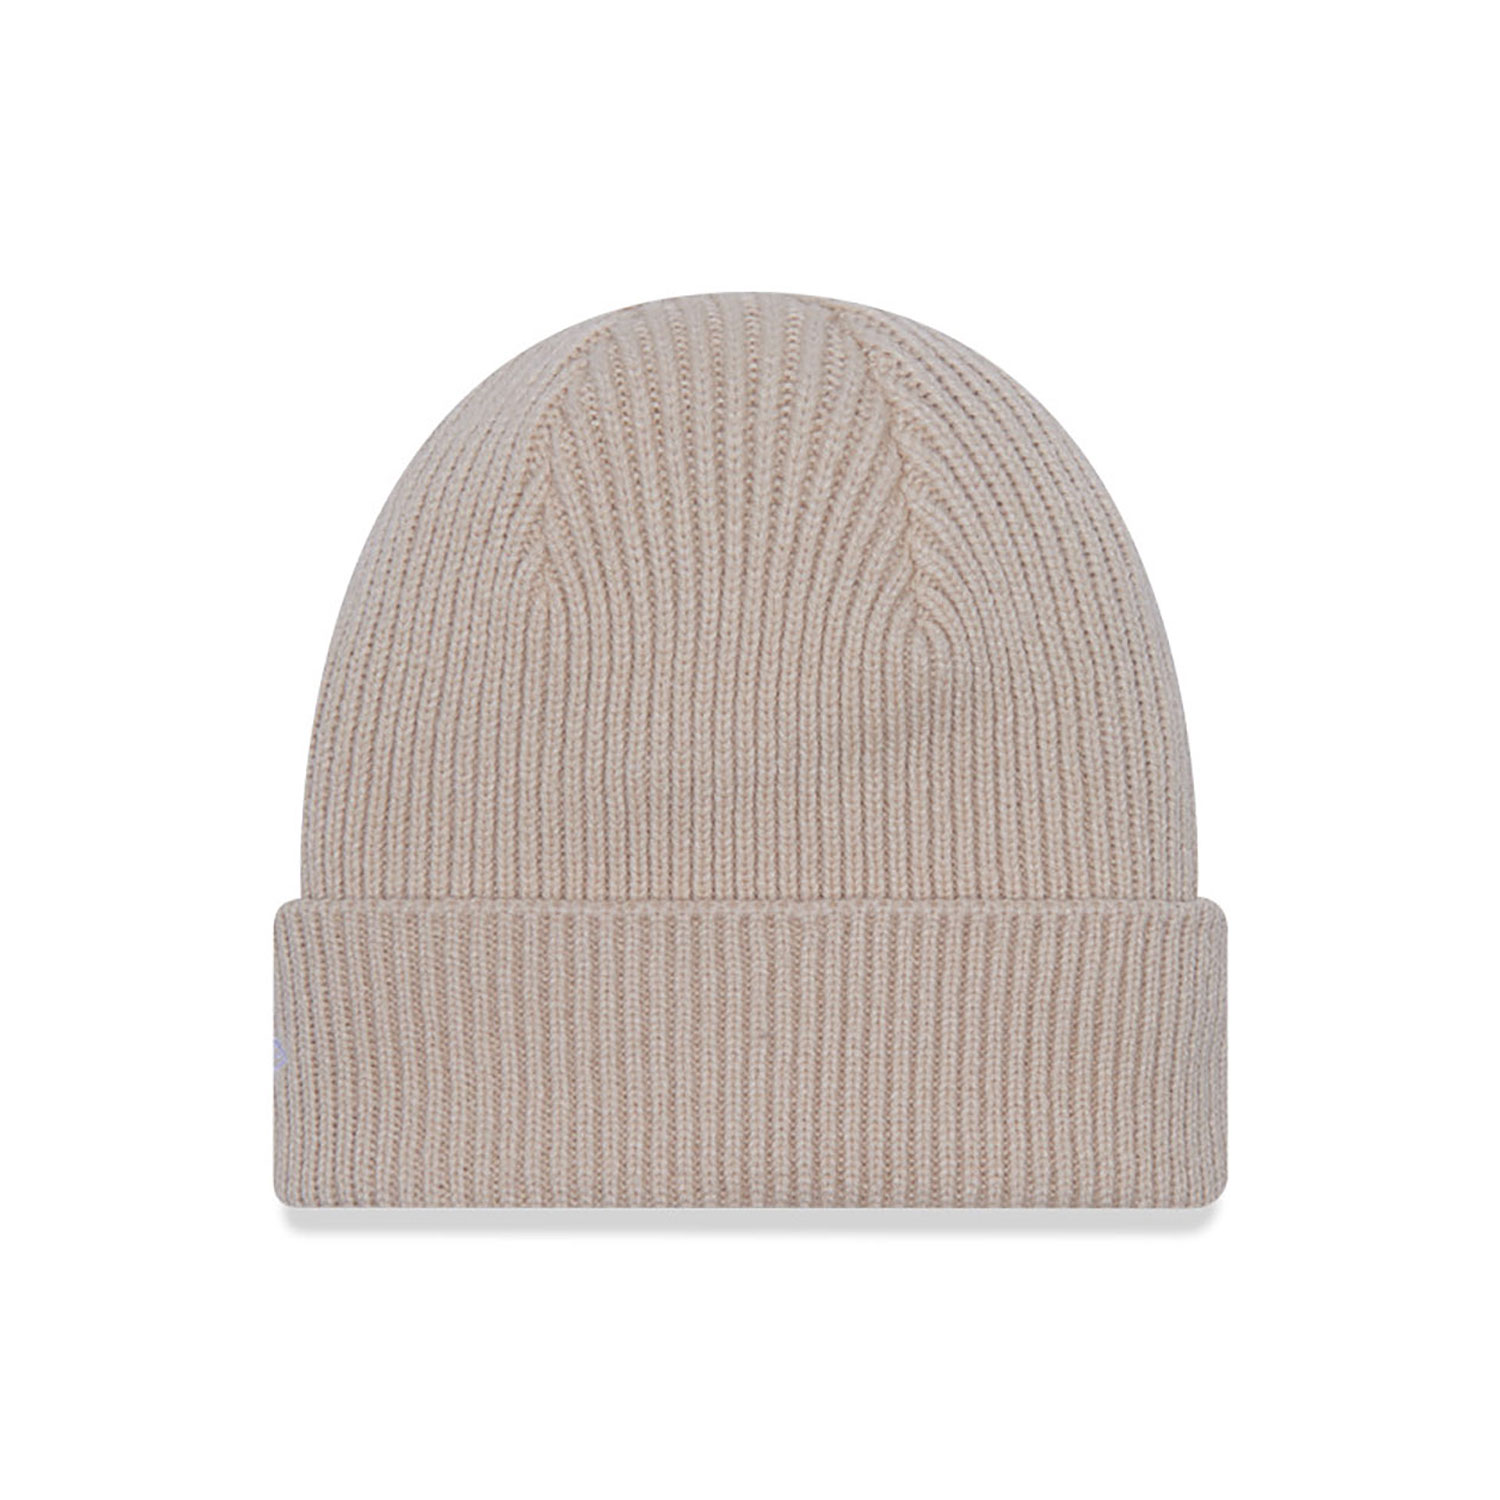 New Era Wool Light Beige Cuff Knit Beanie Hat